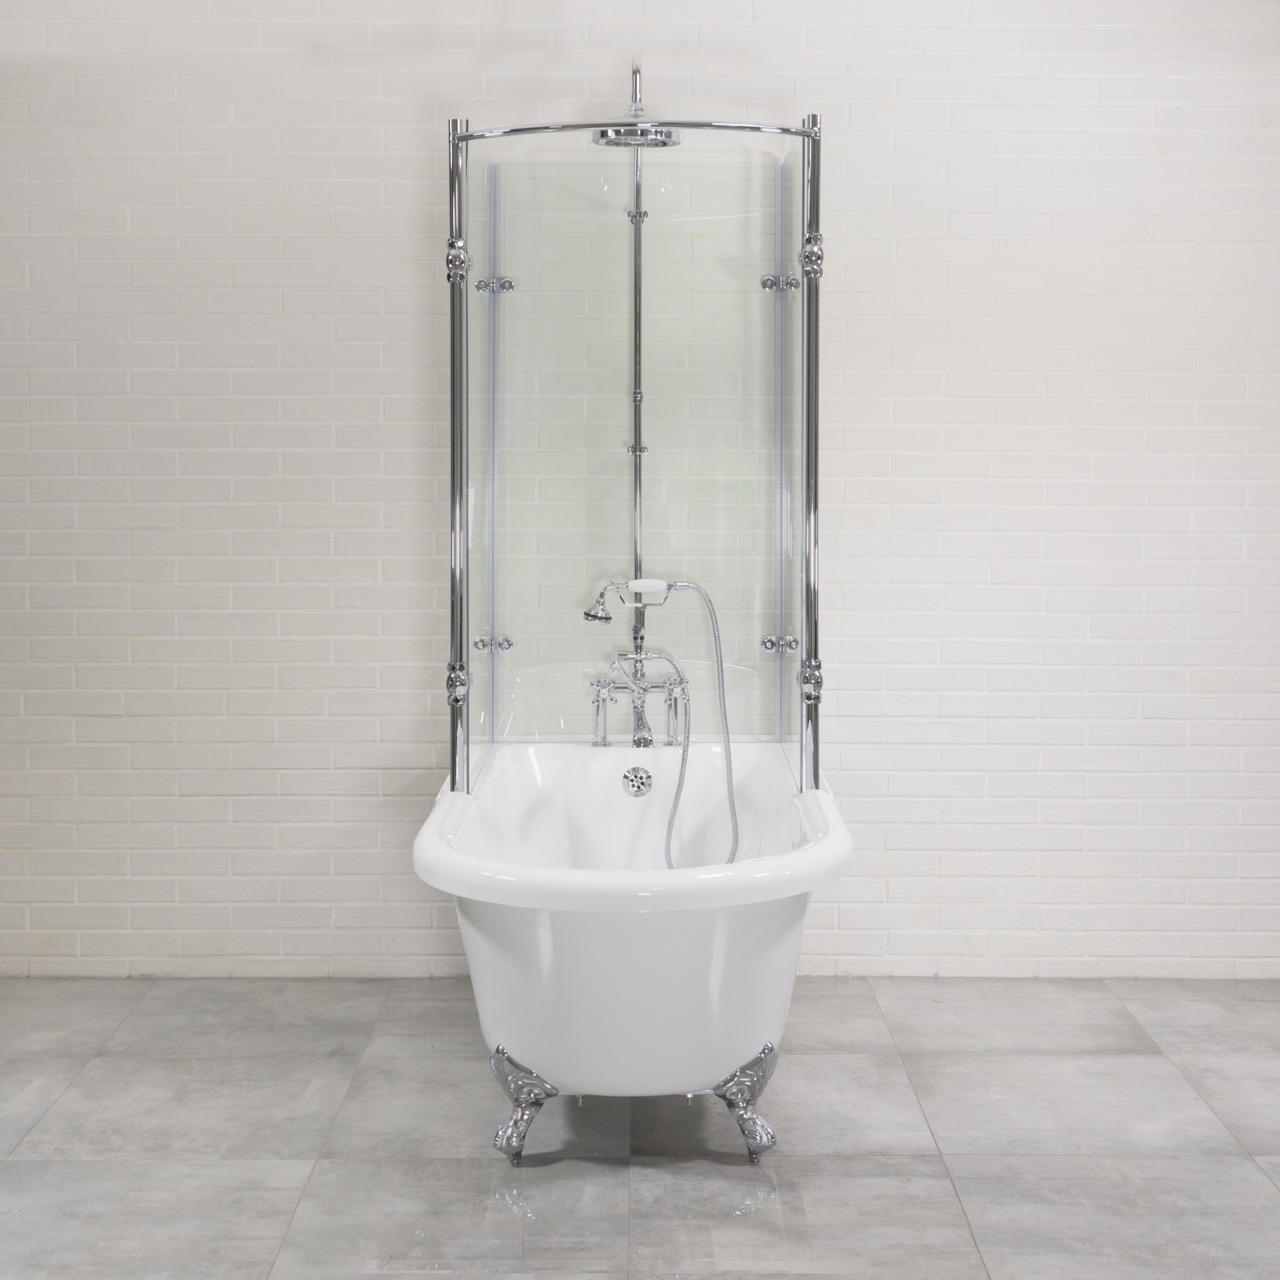 How Convert A Claw-Foot Tub Showerhead To A Standard